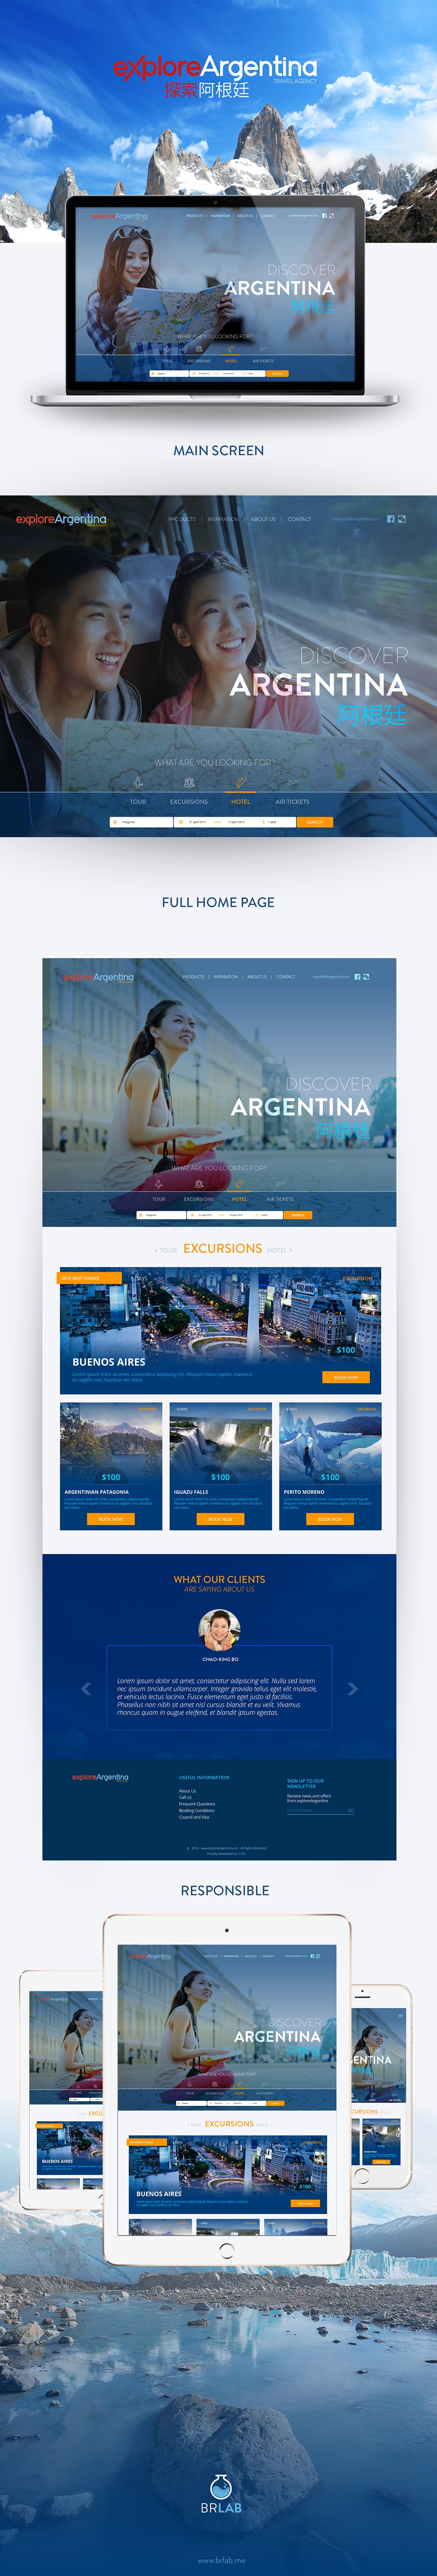 Explore Argentina Travel Agency